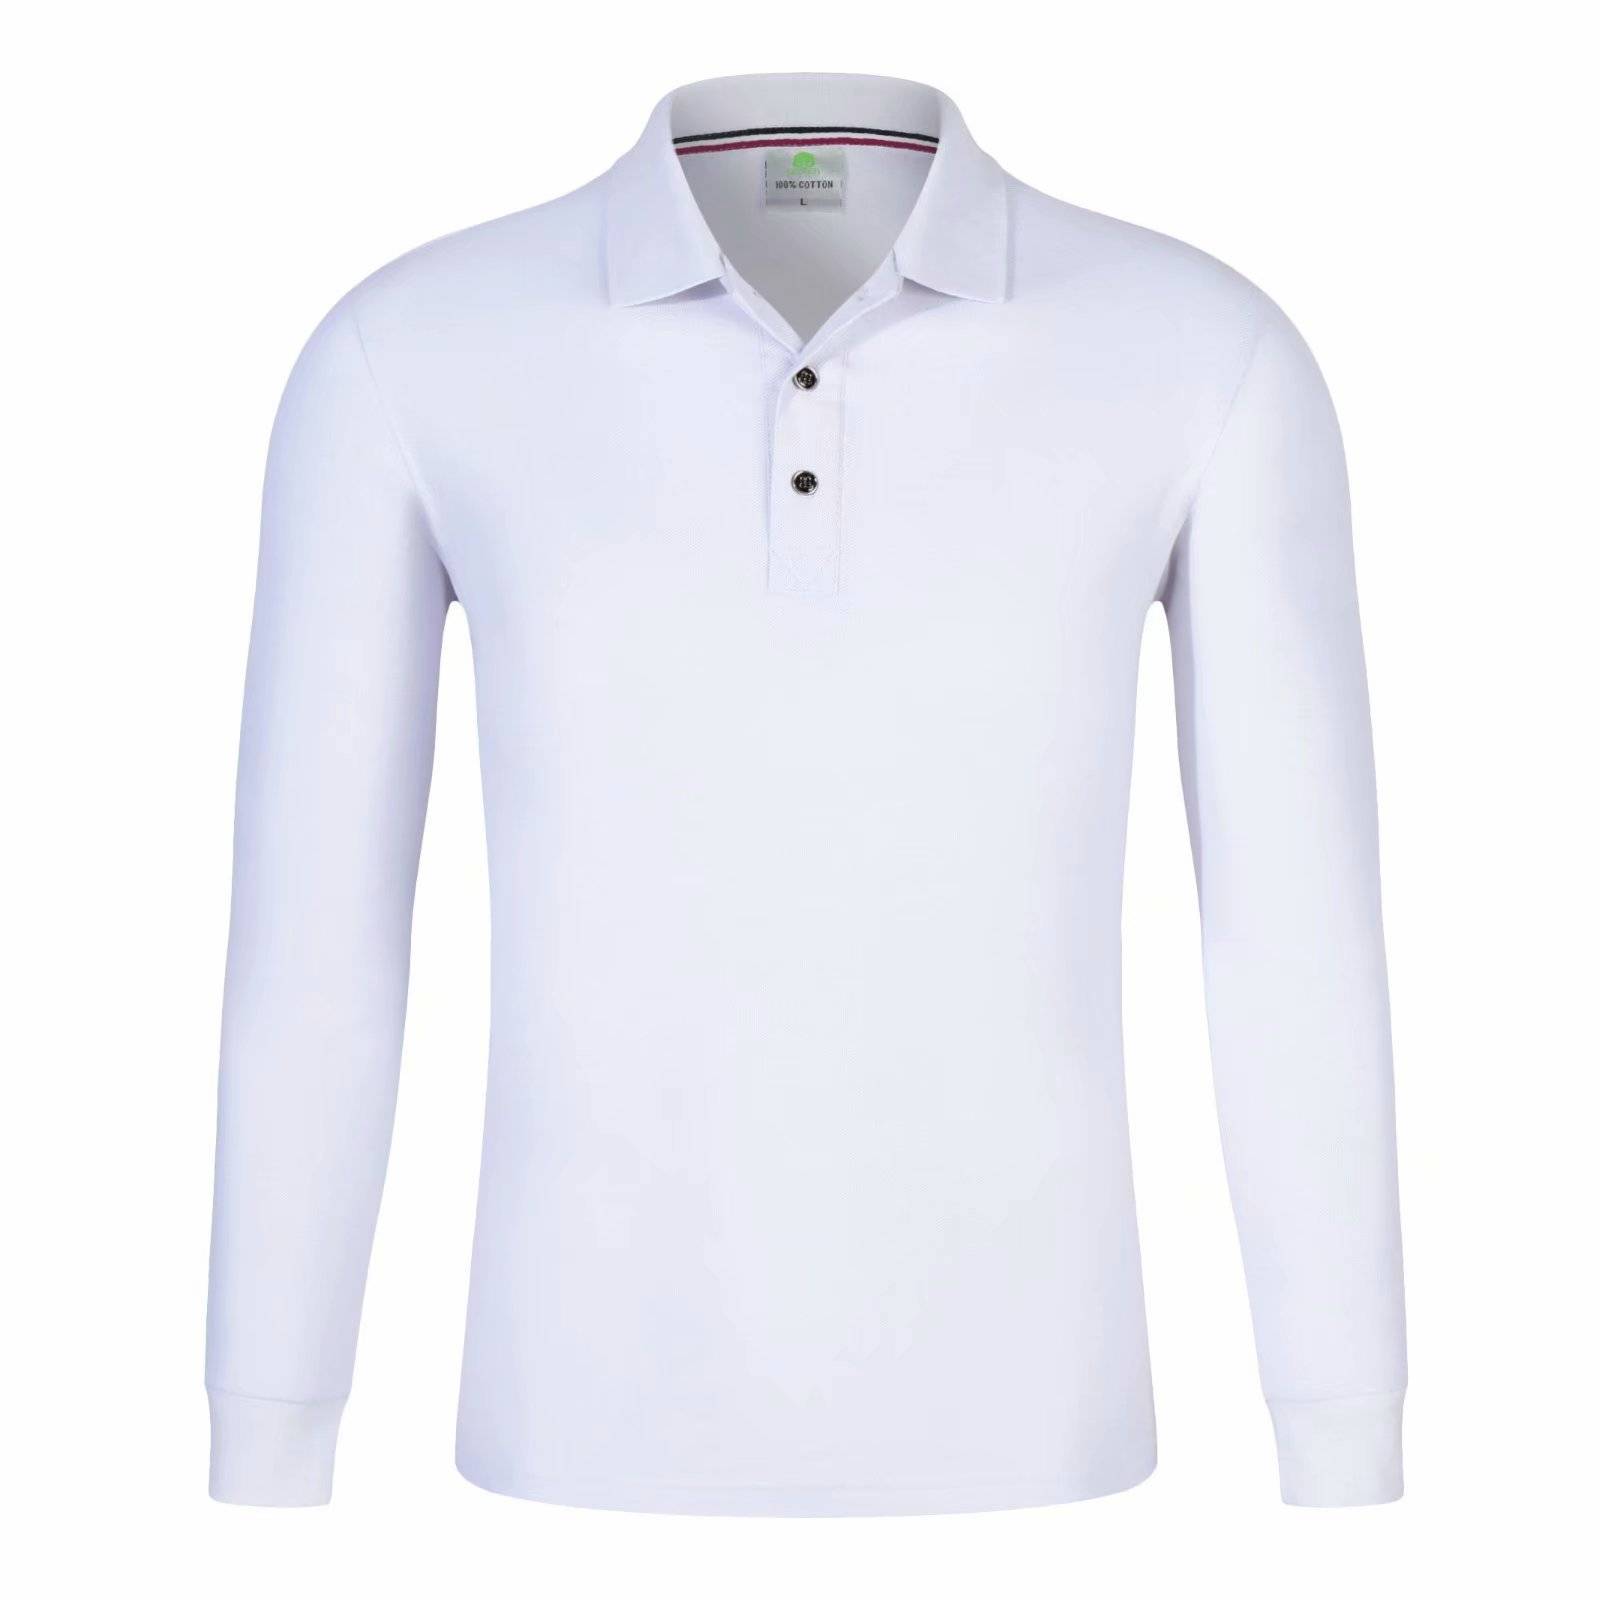 RBLS1900 240g  cotton lapel long sleeve Shirt